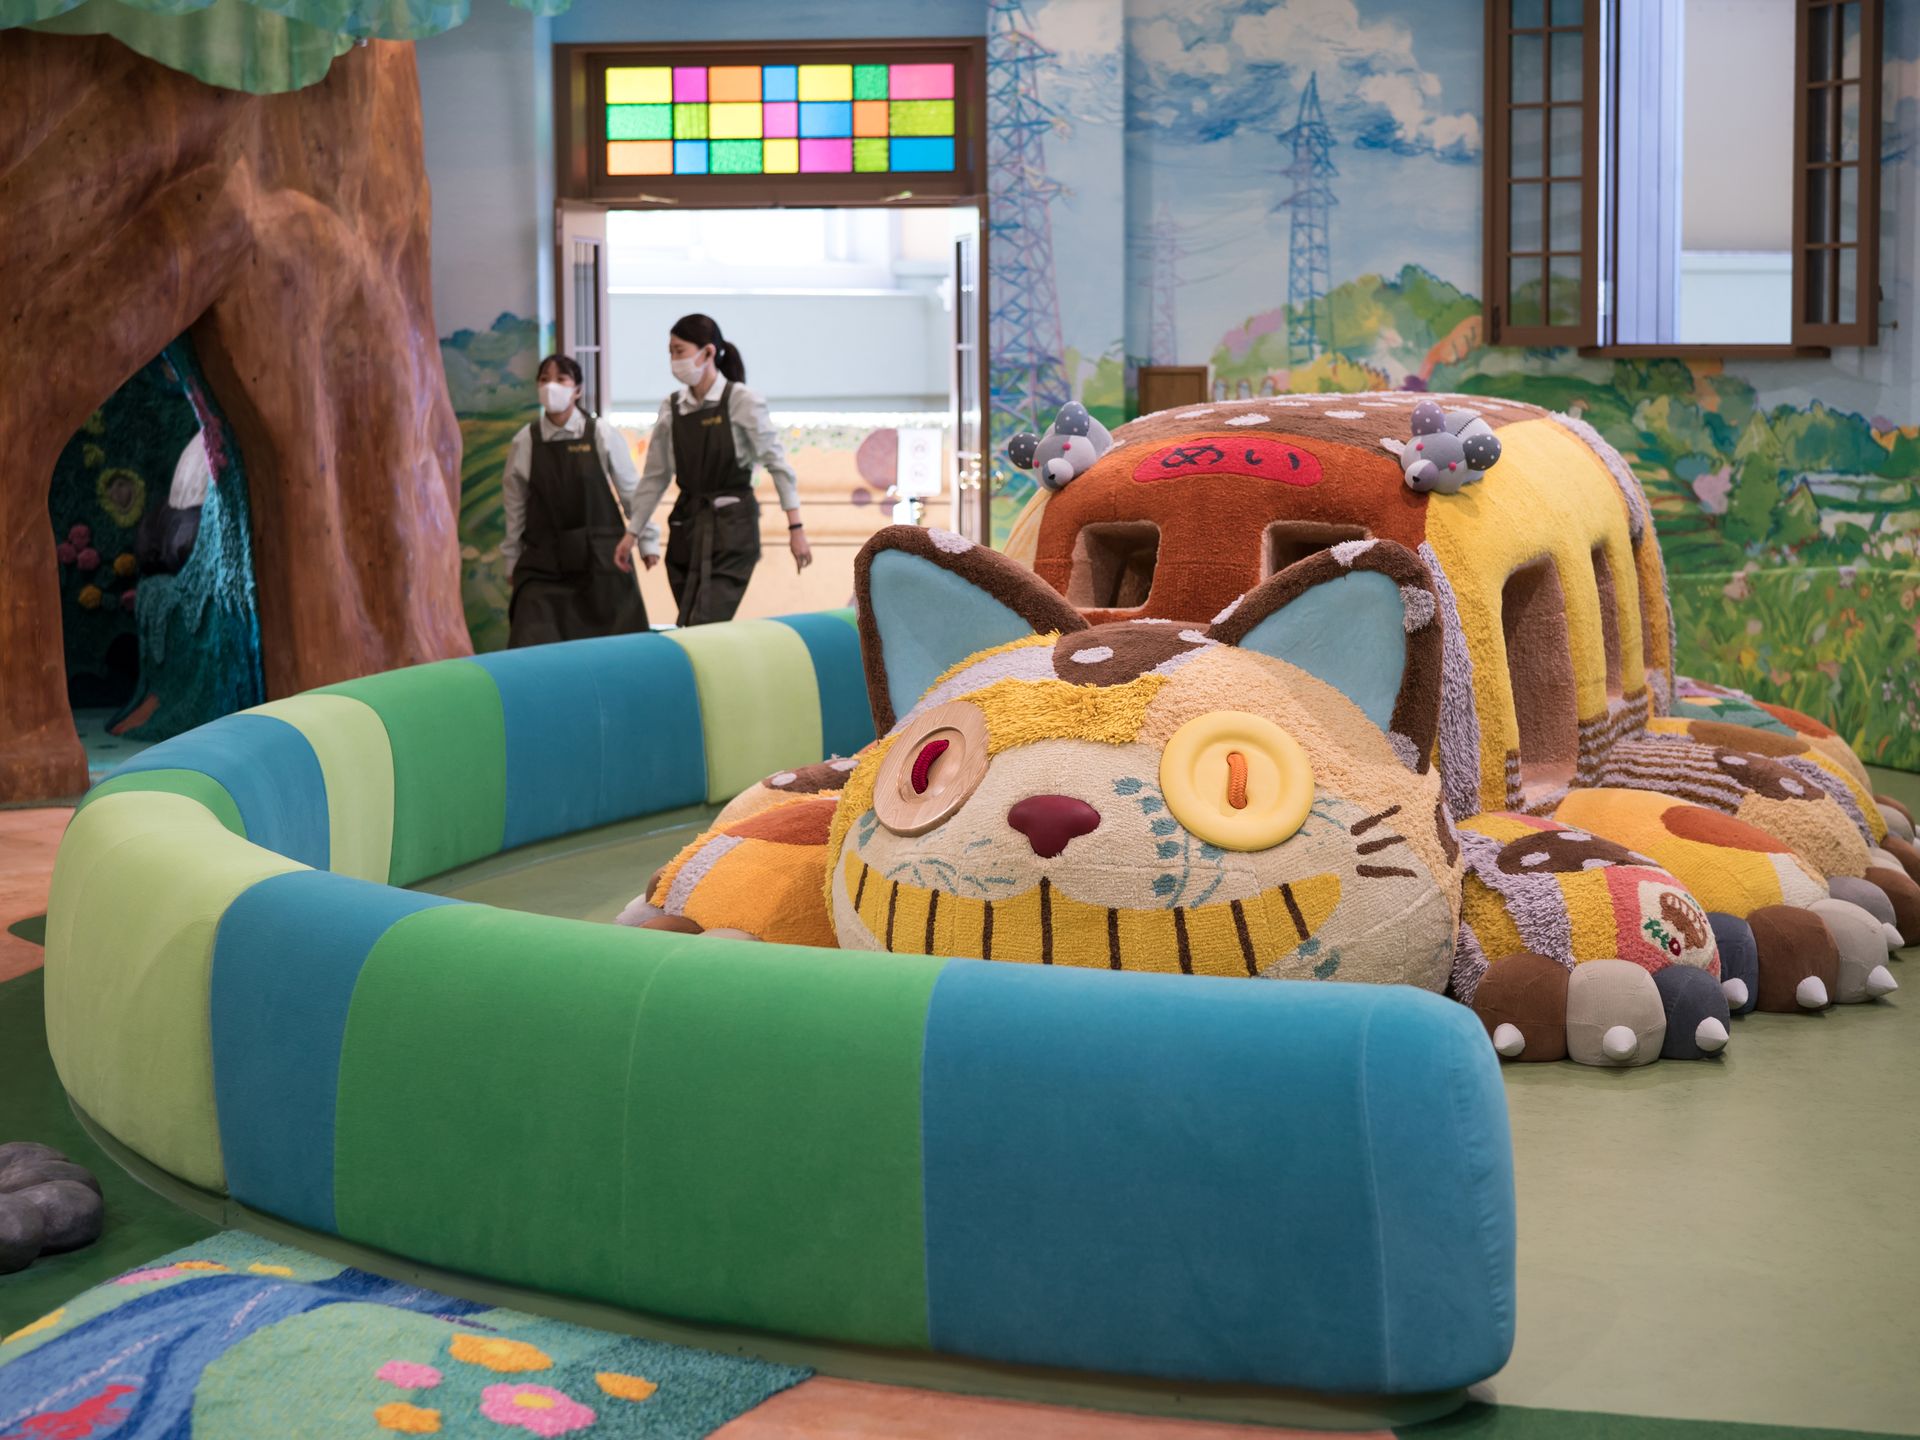 A Visit to Ghibli Park, a Miyazaki Theme Park - The New York Times